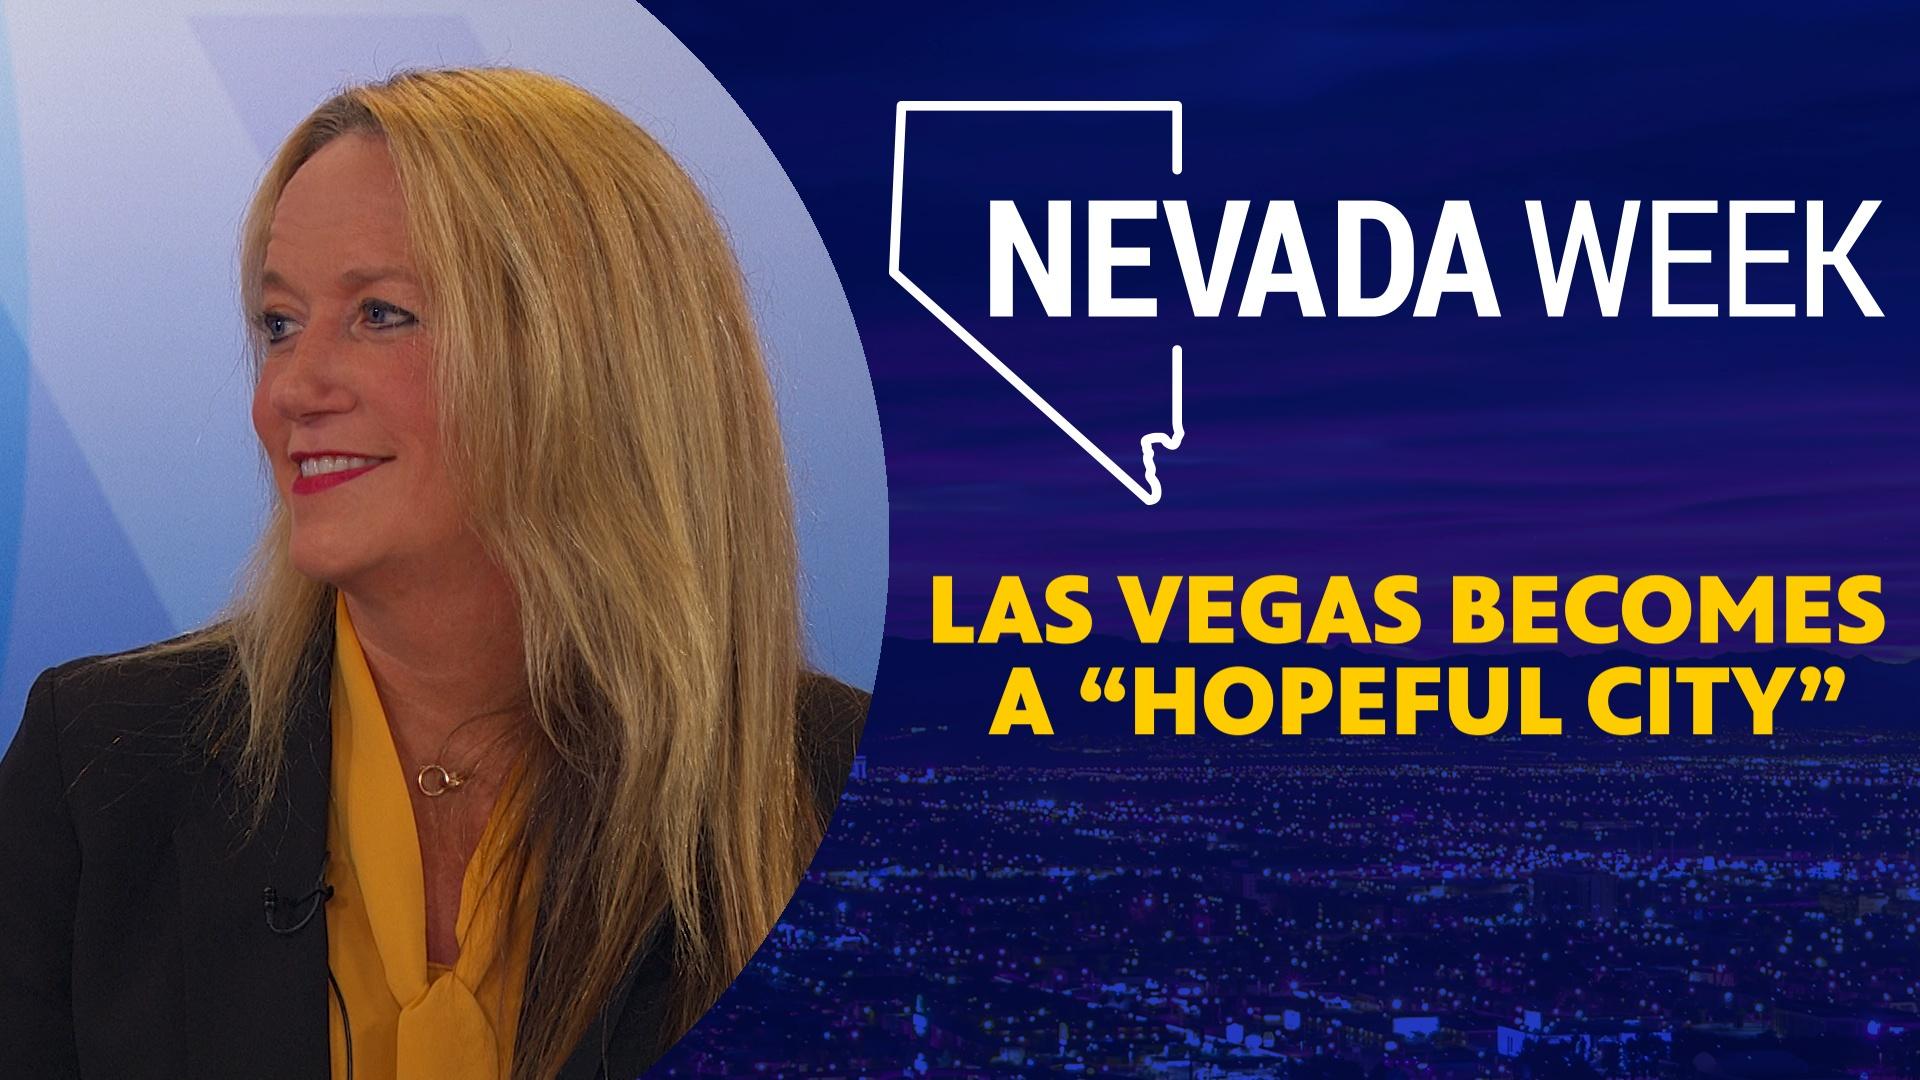 Las Vegas becomes a “hopeful city”